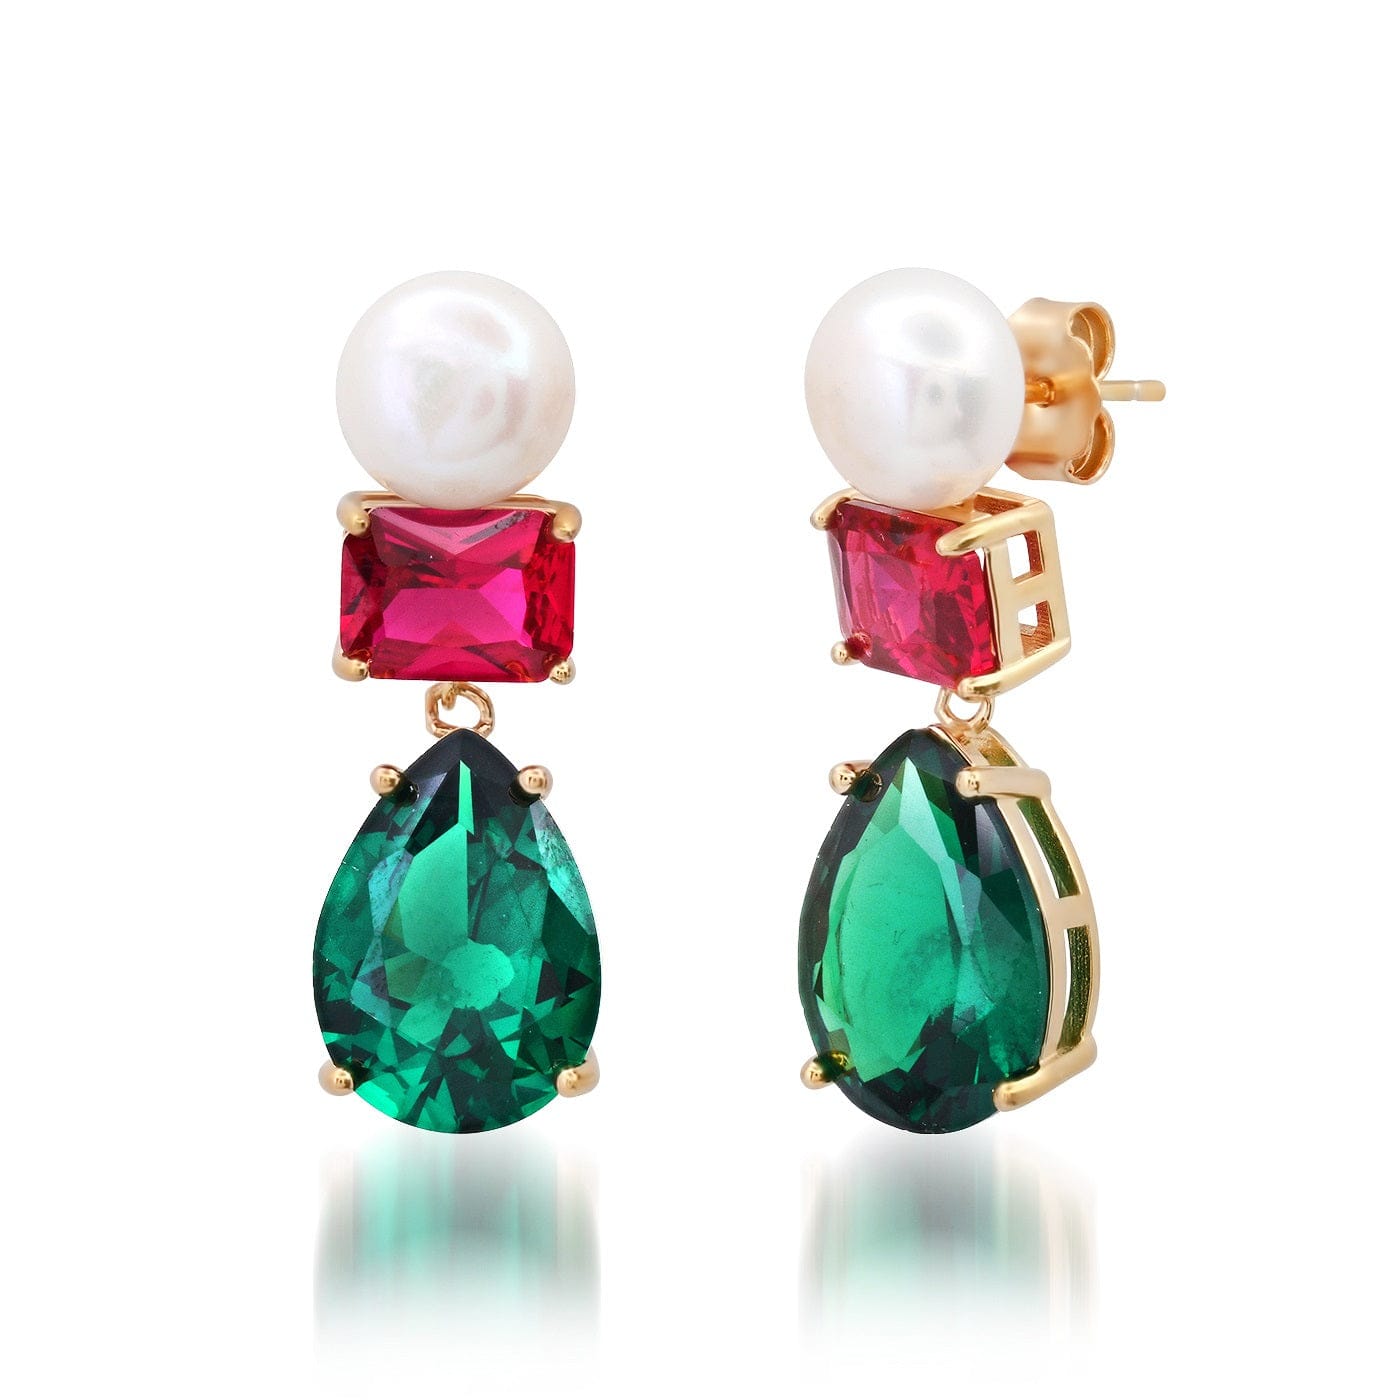 TAI JEWELRY Earrings Green Pear Stone and Pearl Drop Earrings